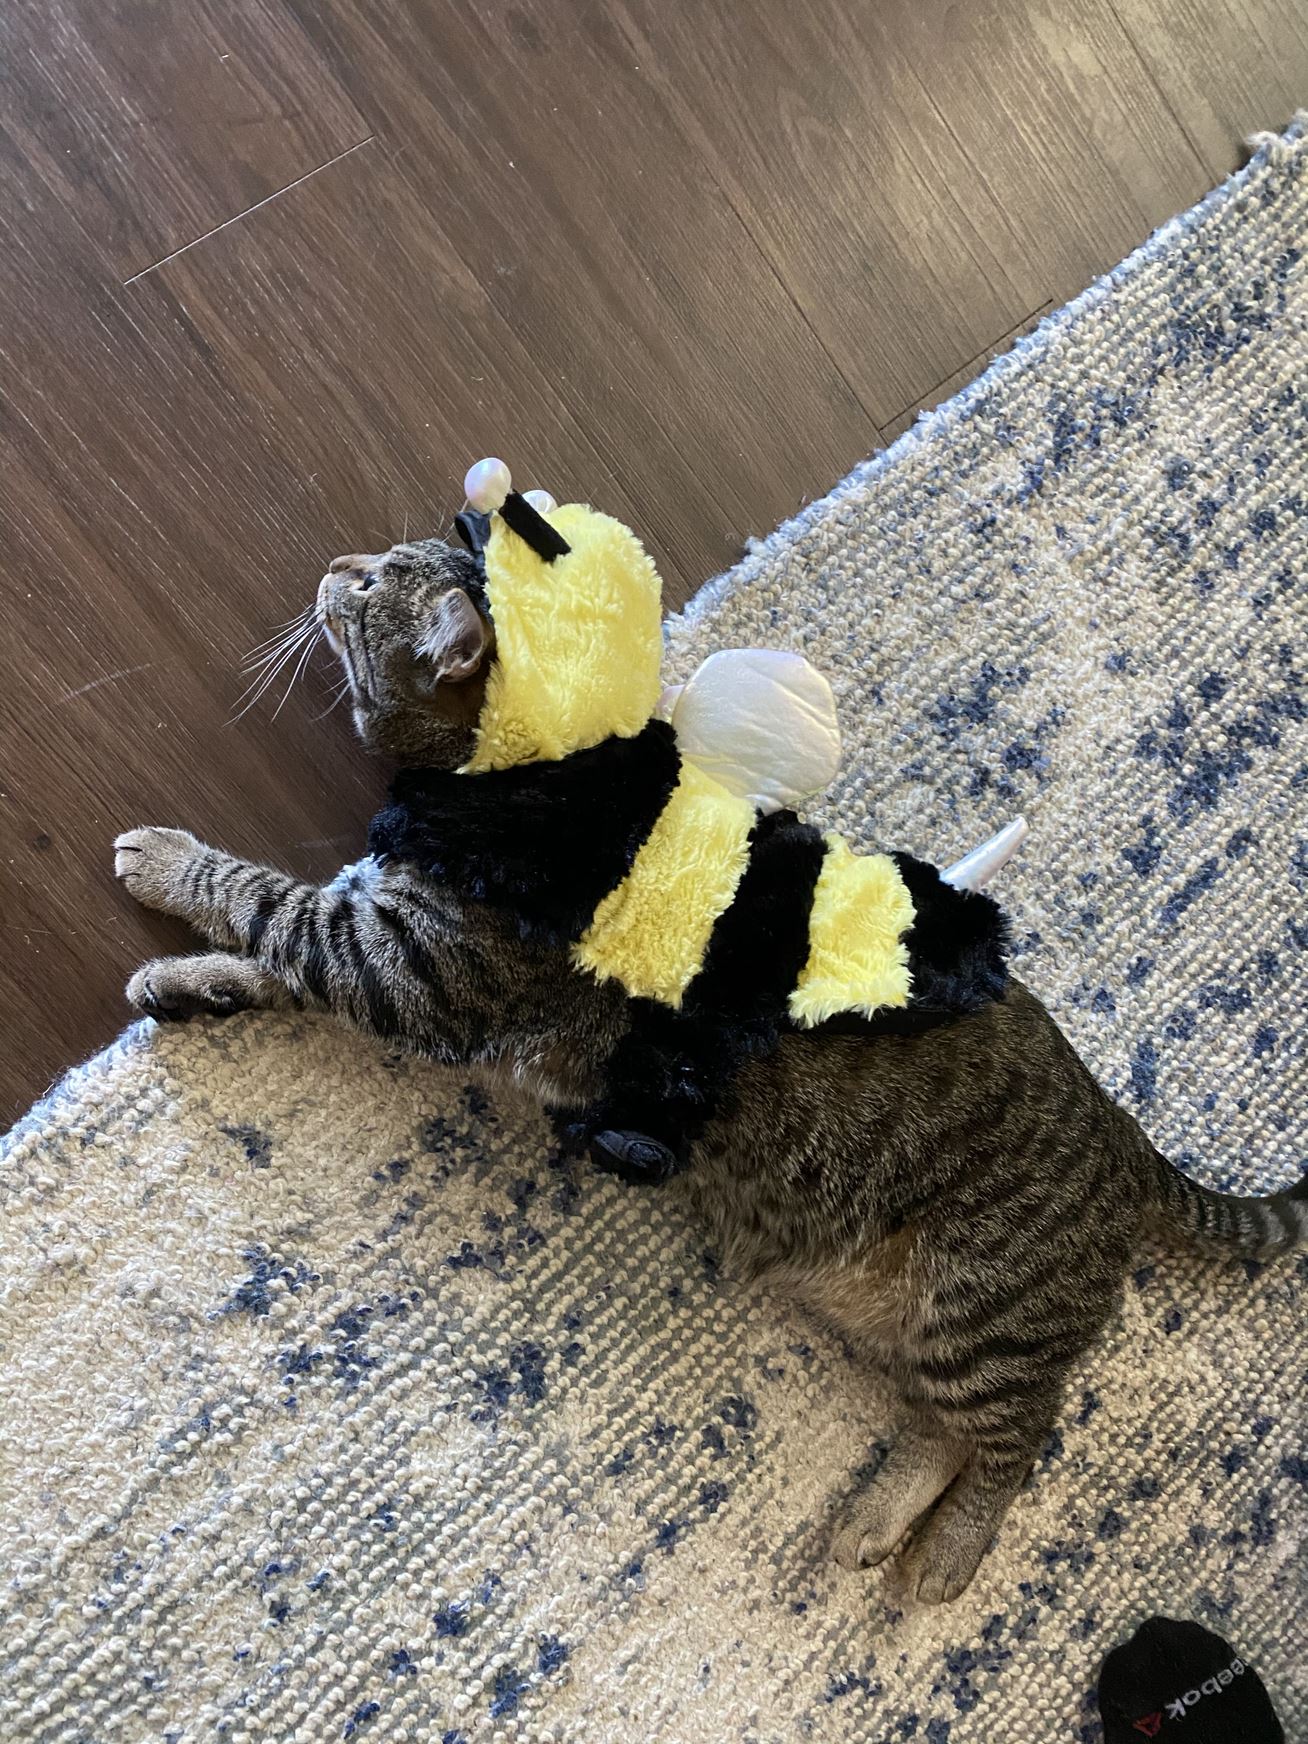 Bumble Bee Kitty